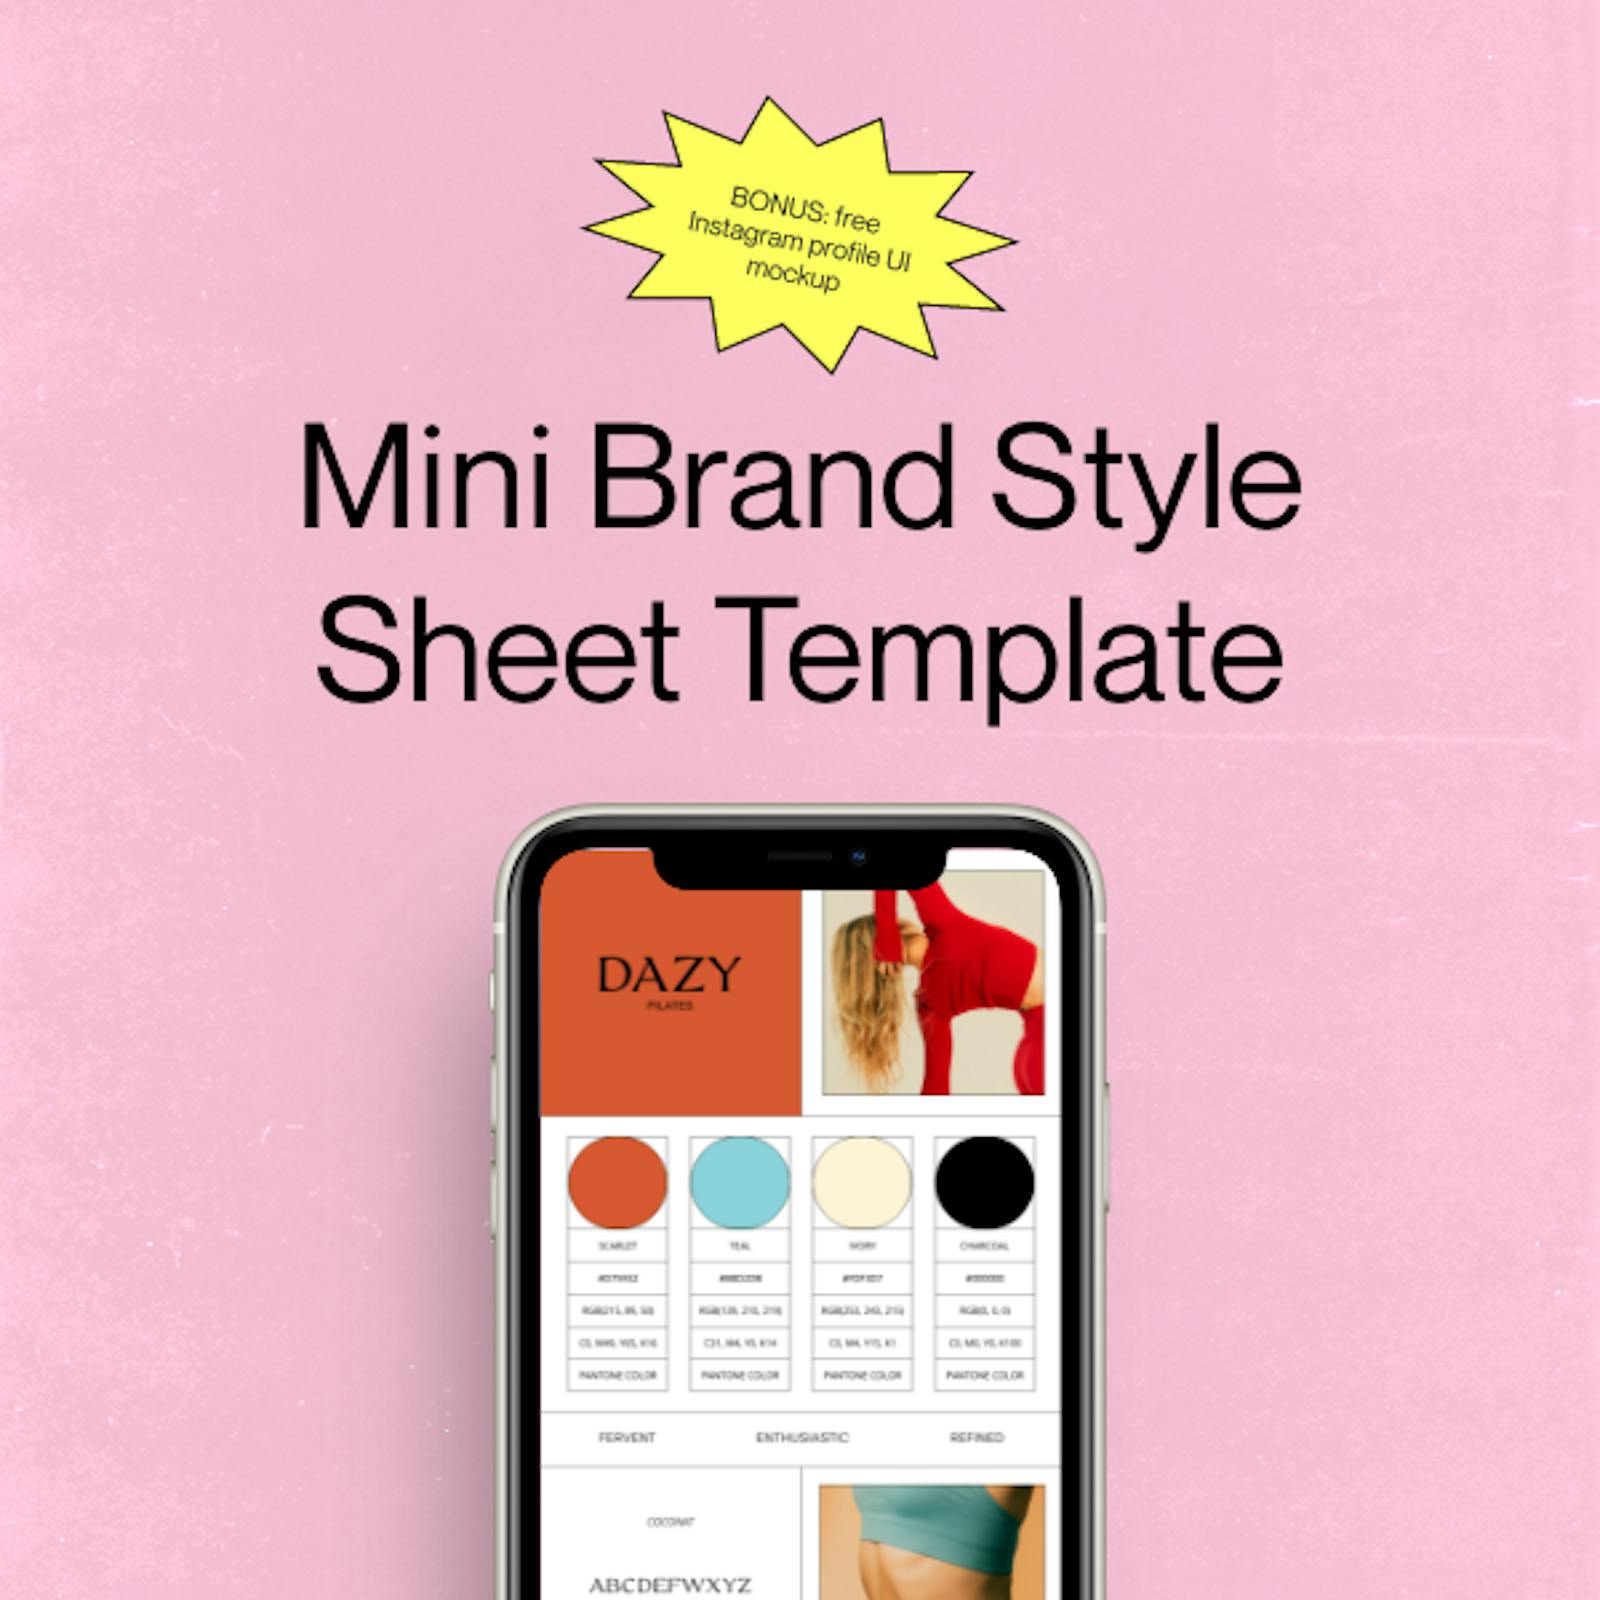 Mini Brand Style Sheet Template